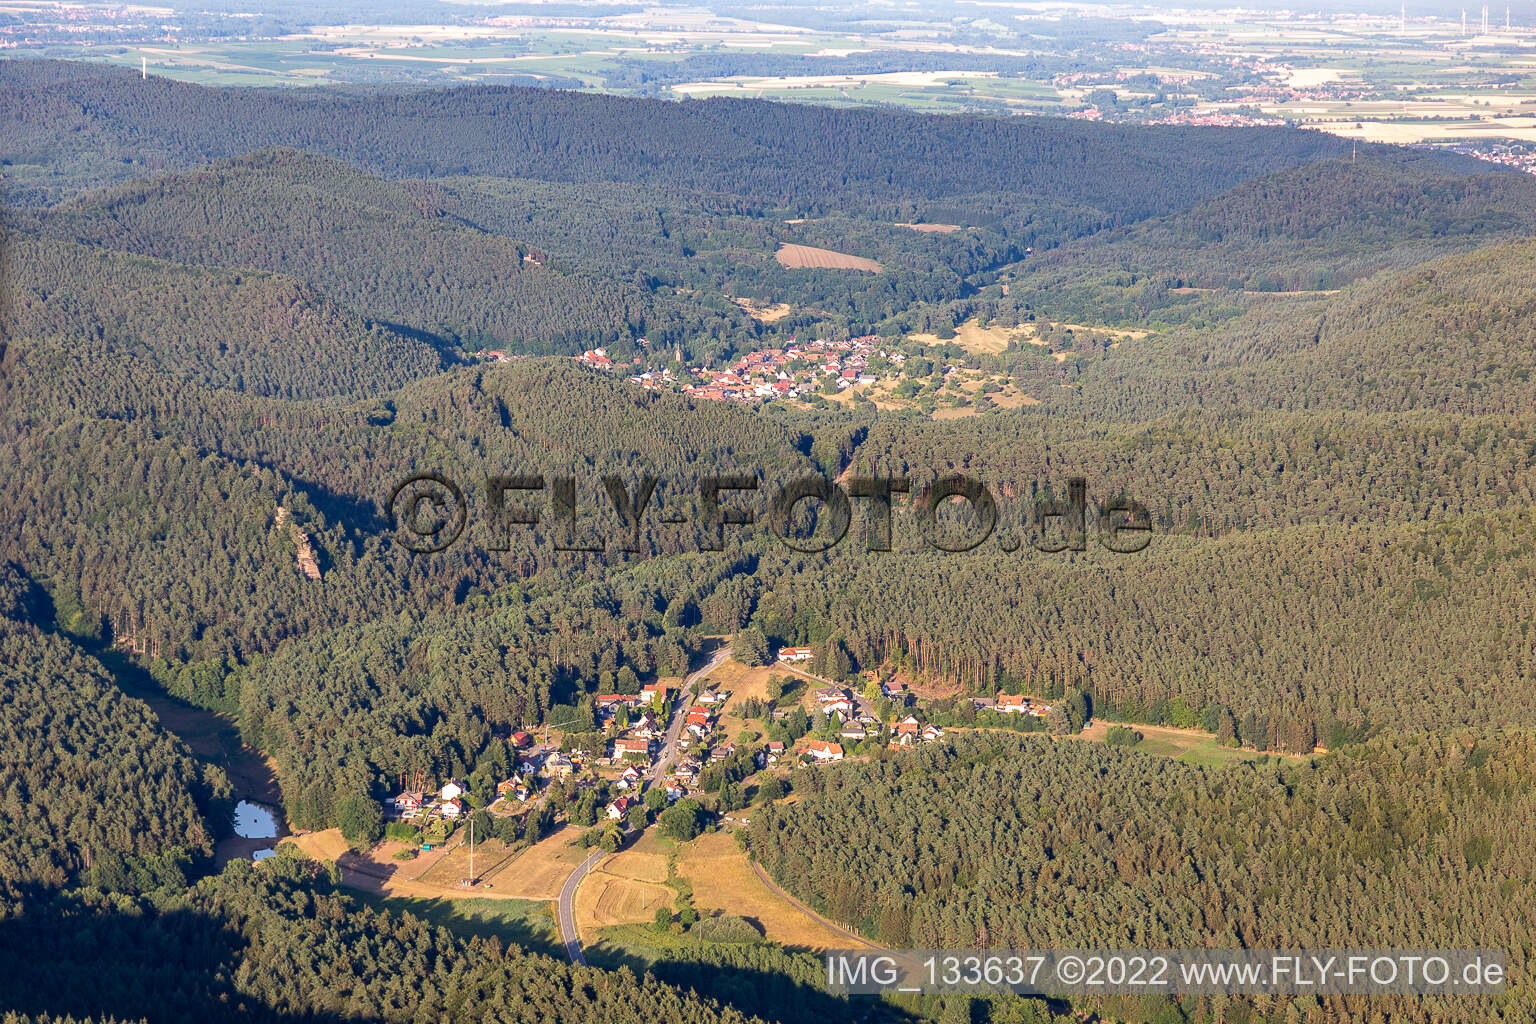 Lauterschwan in Erlenbach bei Dahn in the state Rhineland-Palatinate, Germany from above